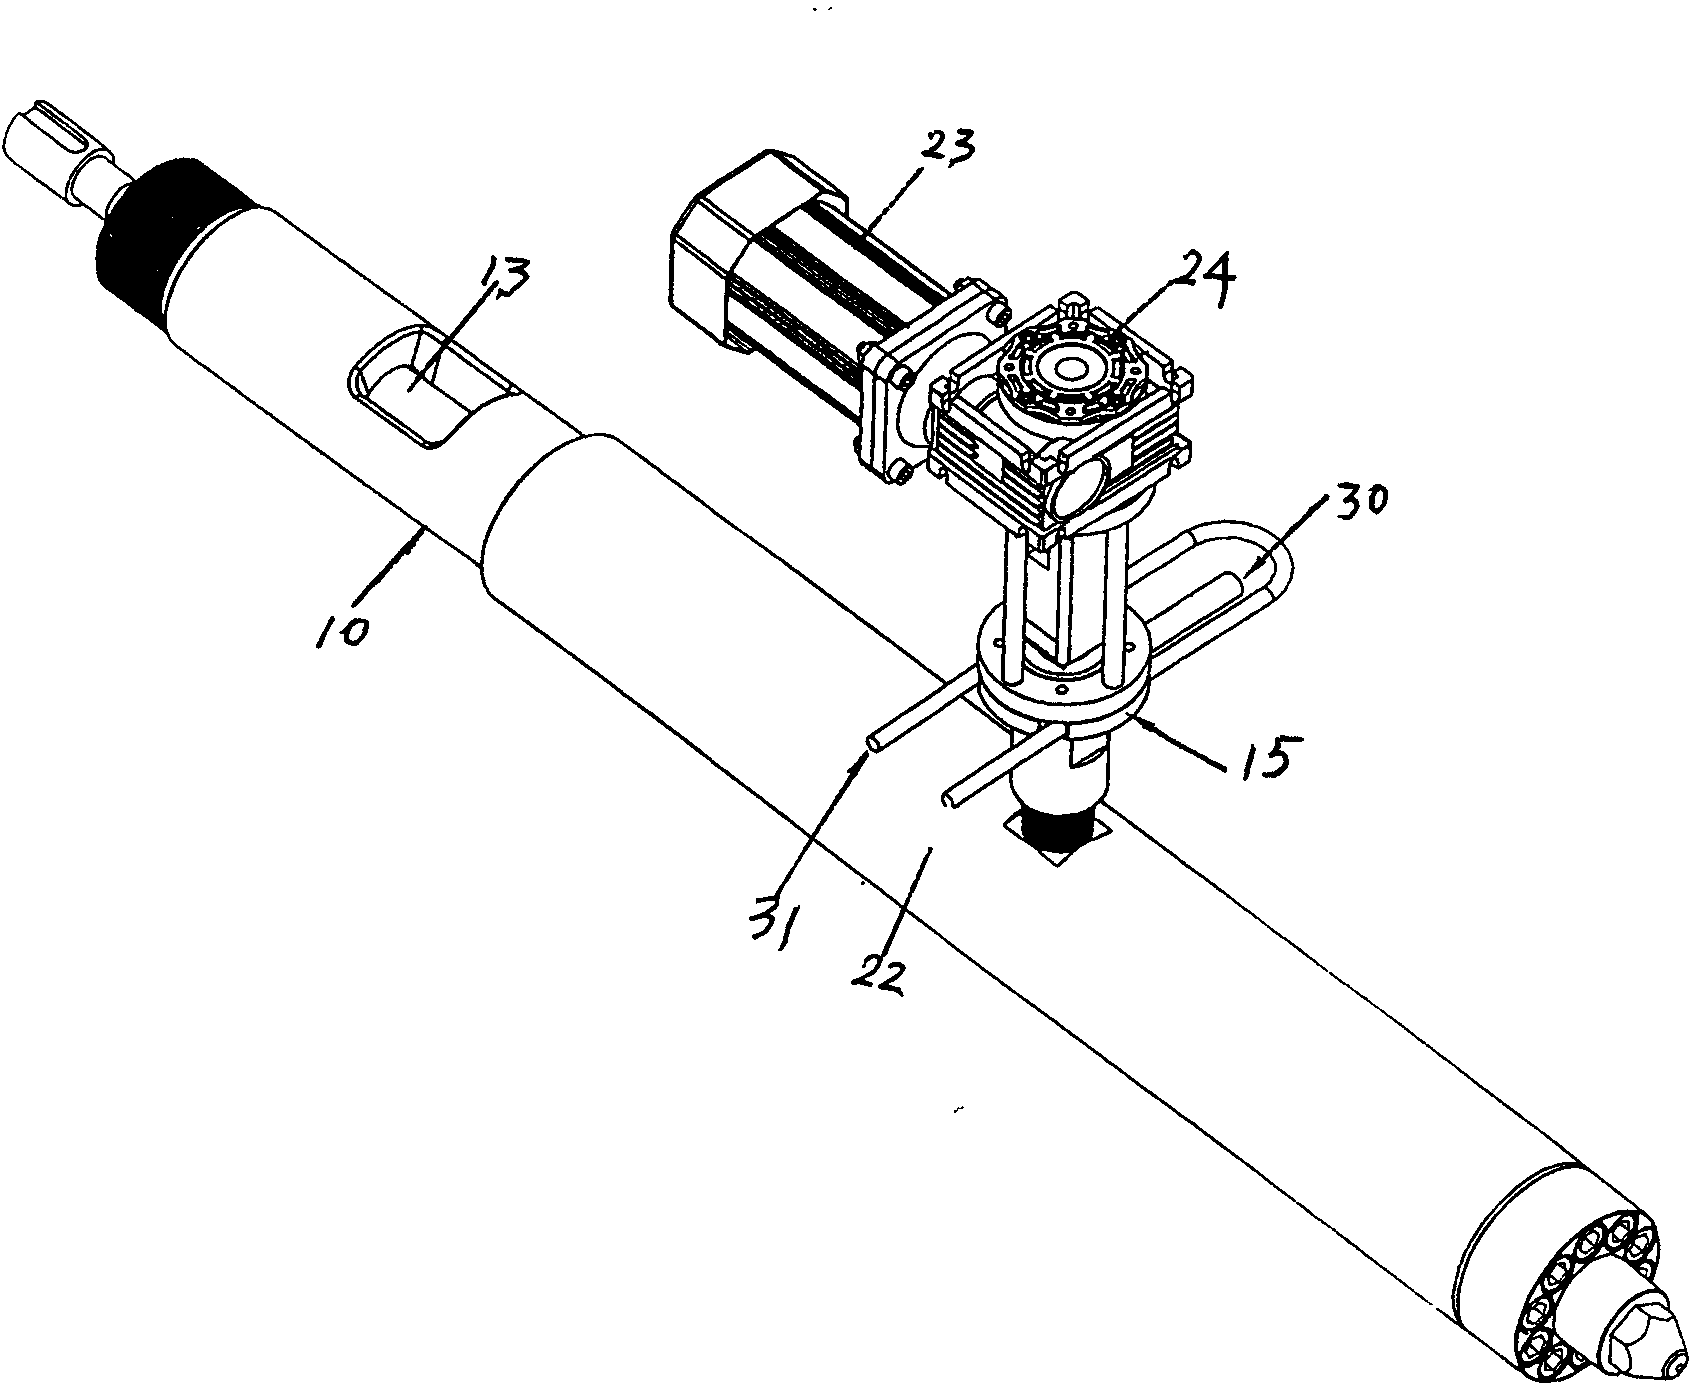 Vacuum-exhausting-type screw barrel